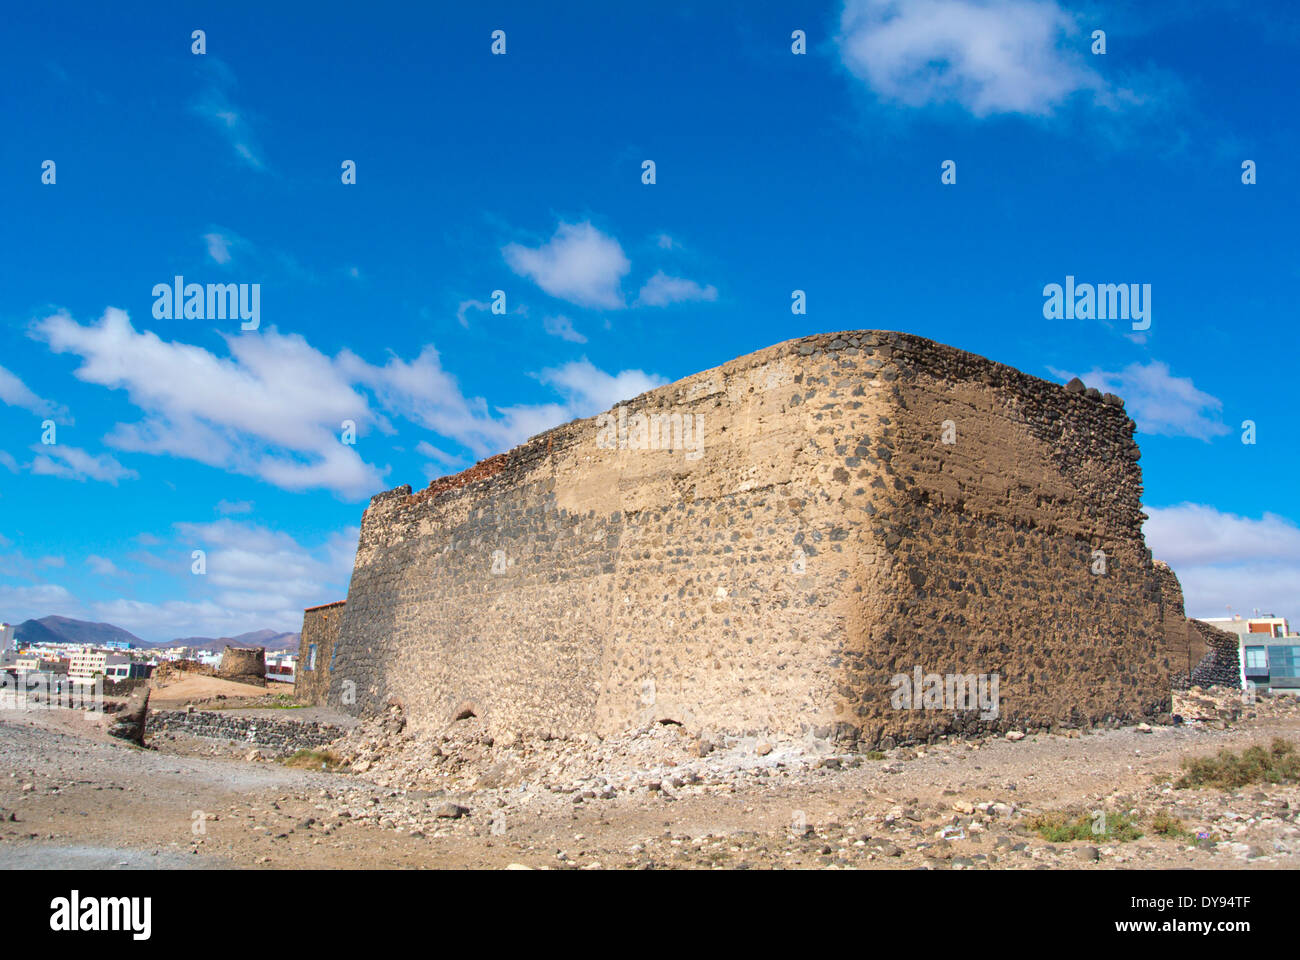 Fortress ruins, El Charco district, Puerto del Rosaro, Fuerteventura, the Canary Islands, Spain, Europe Stock Photo